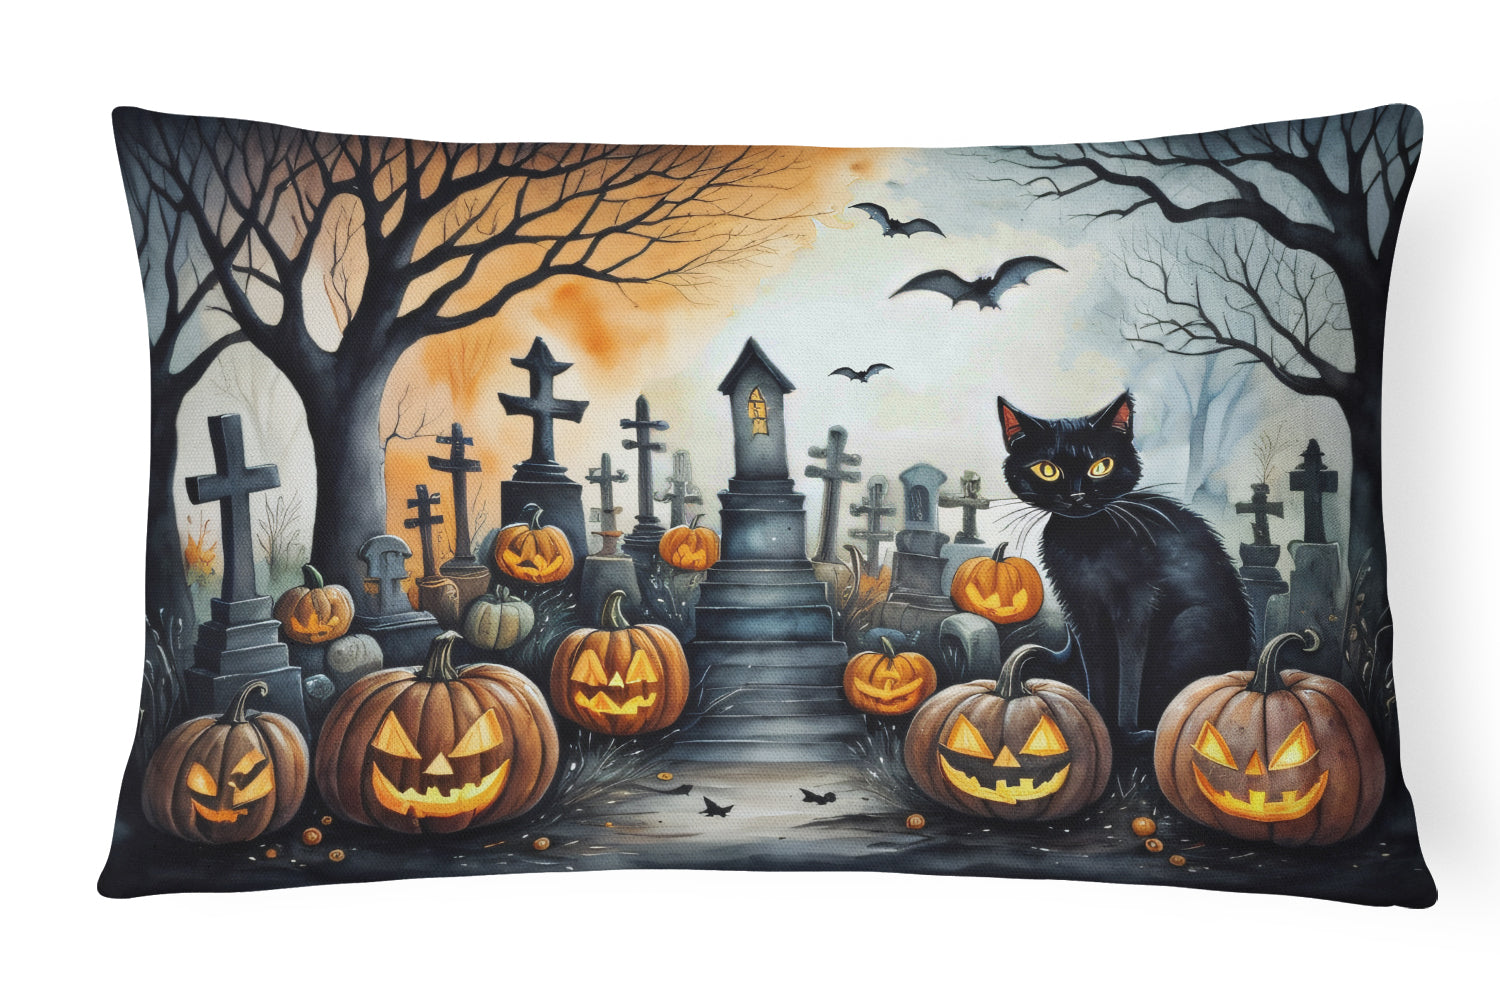 Buy this Black Cat Spooky Halloween Fabric Decorative Pillow